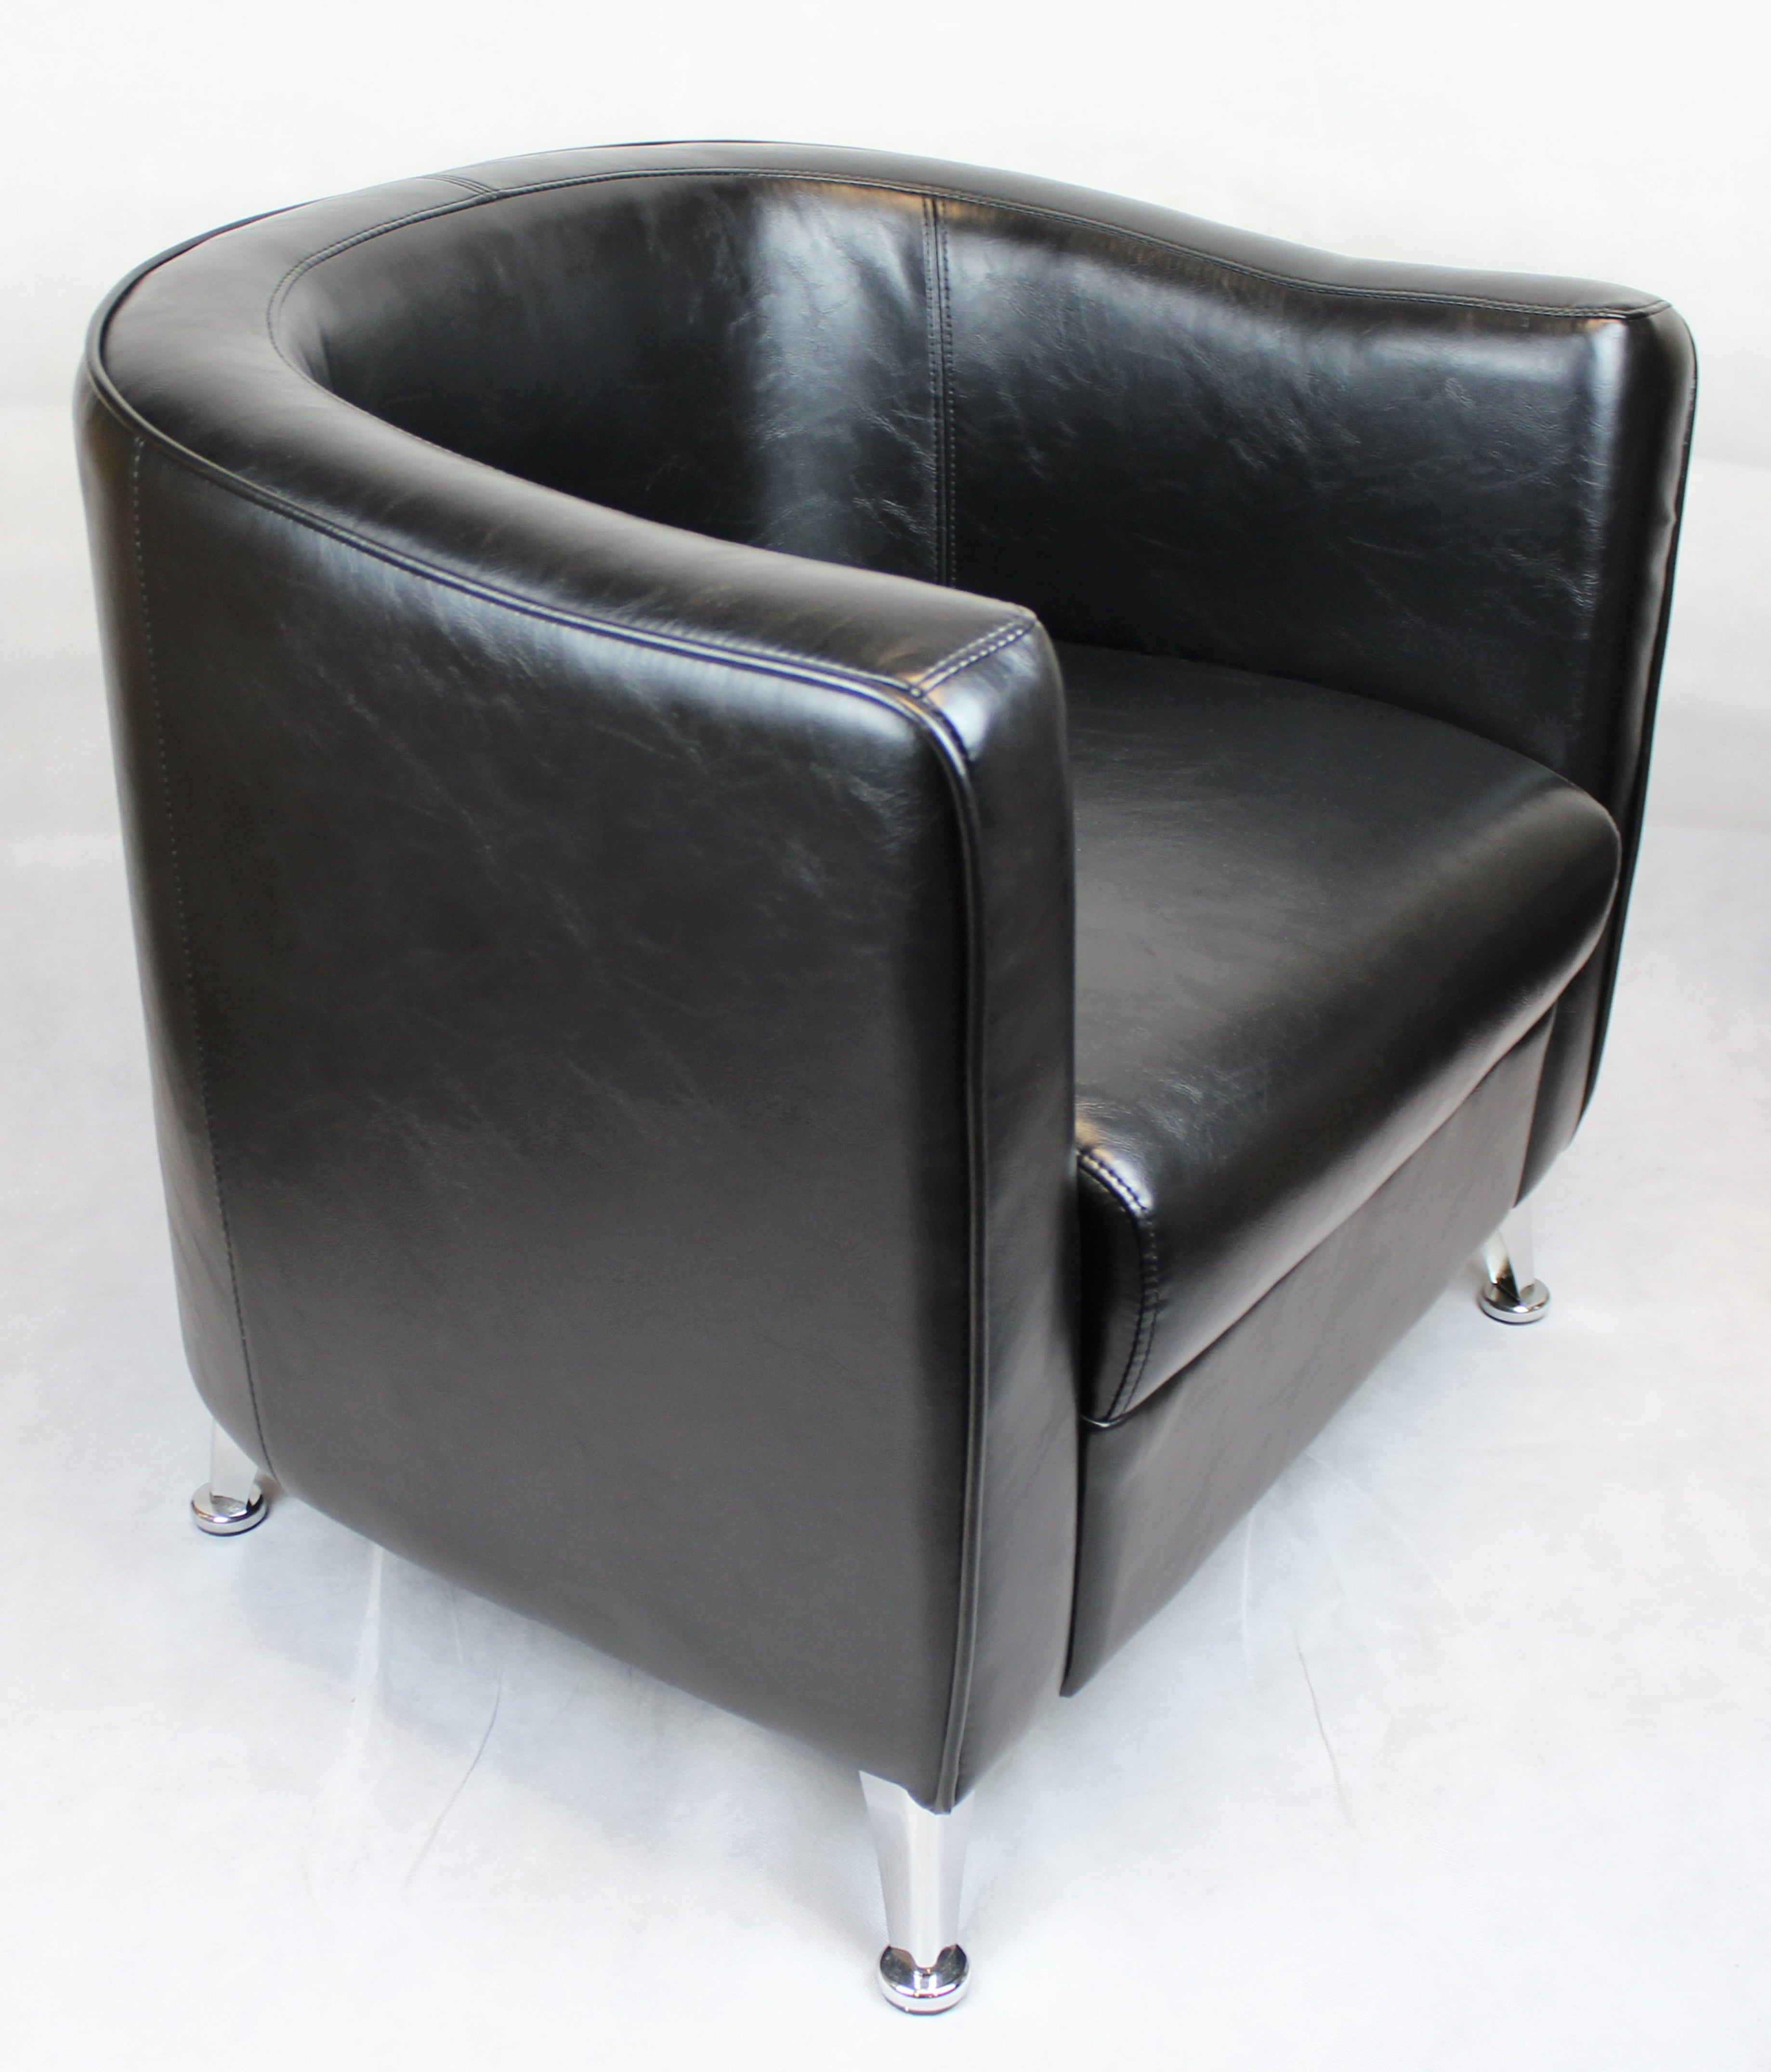 HB-022 Black Tub Reception Chair Huddersfield